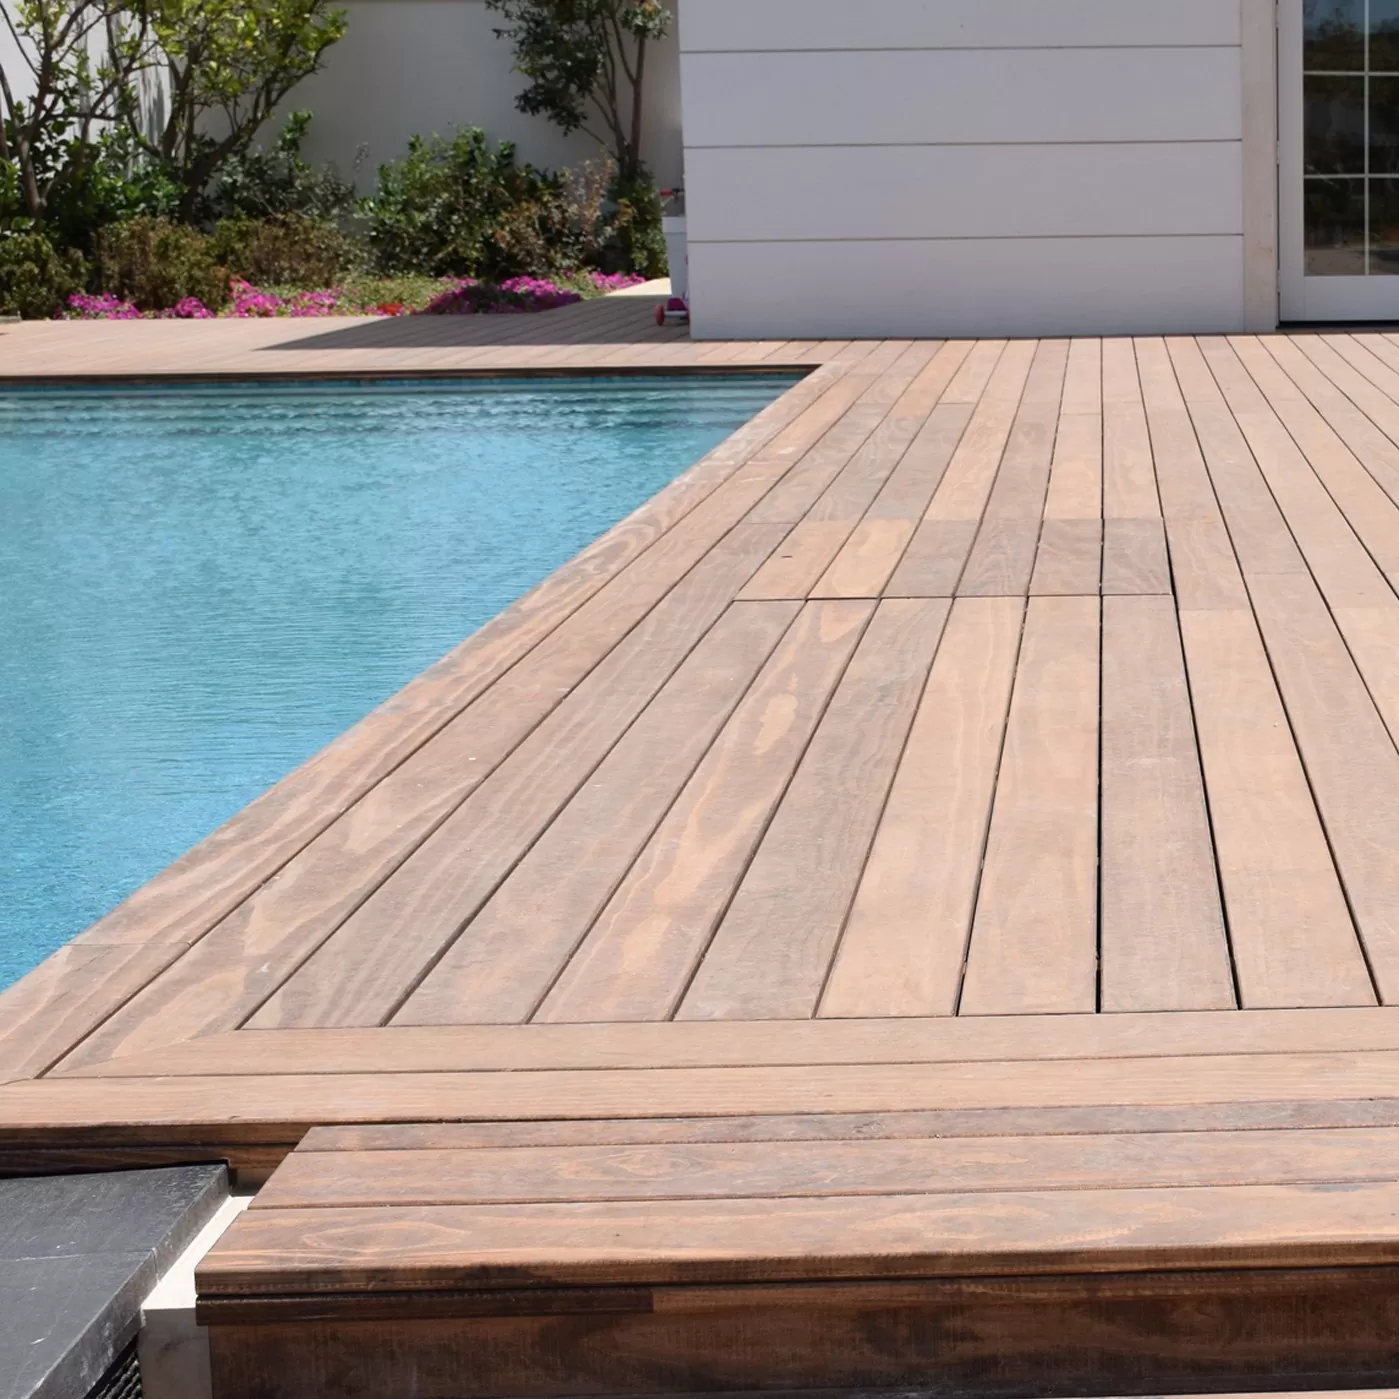 10 Wood Deck Swimming Pools You Want To, Wood Deck Around Inground Pool